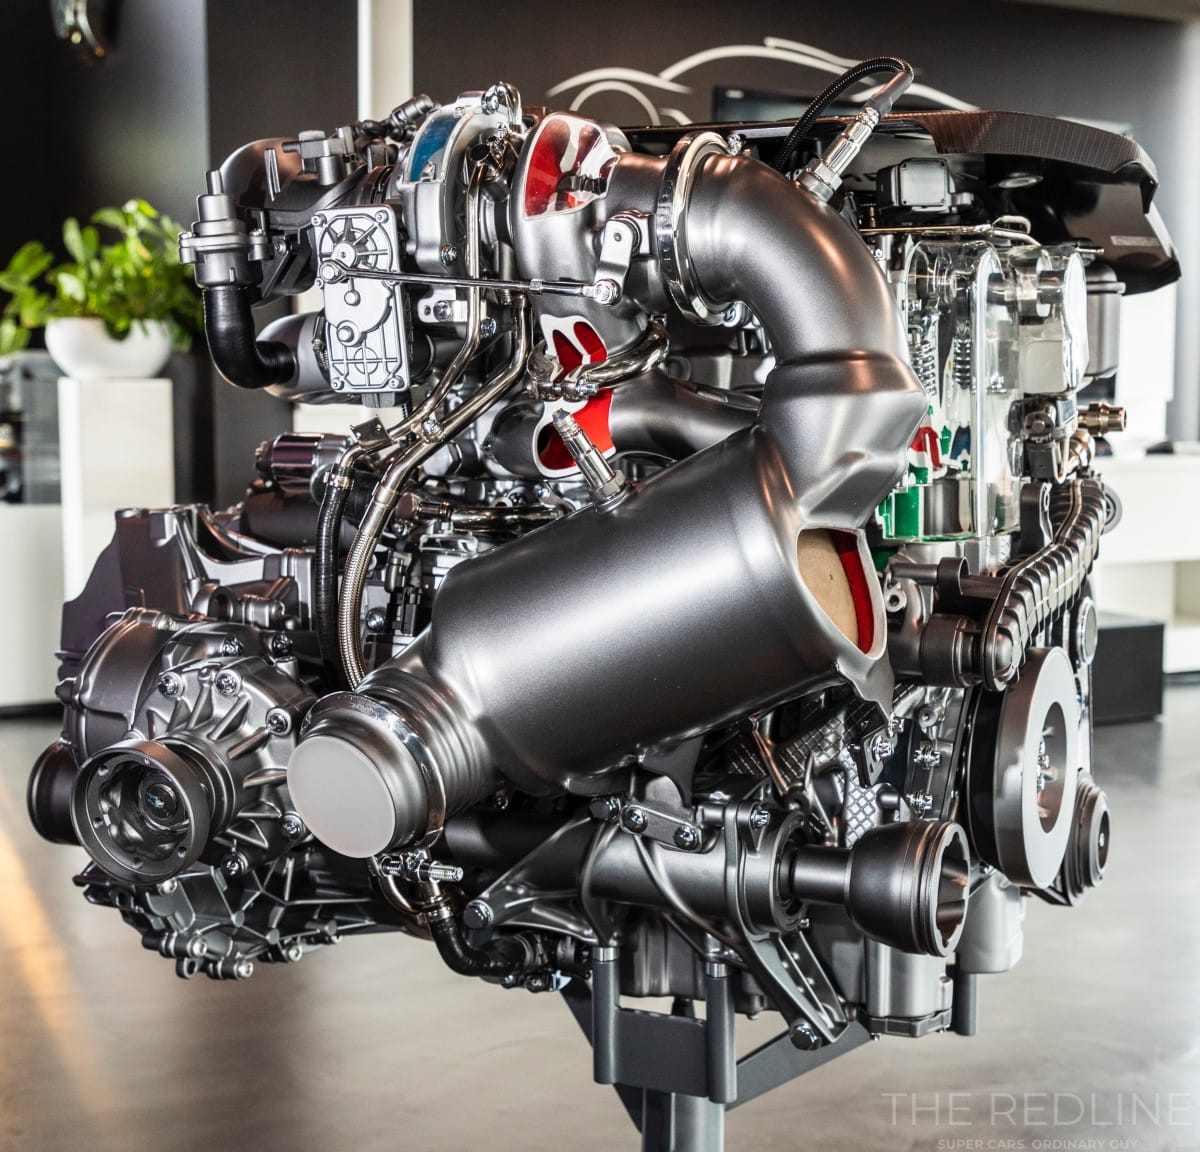 Mercedes-AMG's new M139 pumps 421 horsepower